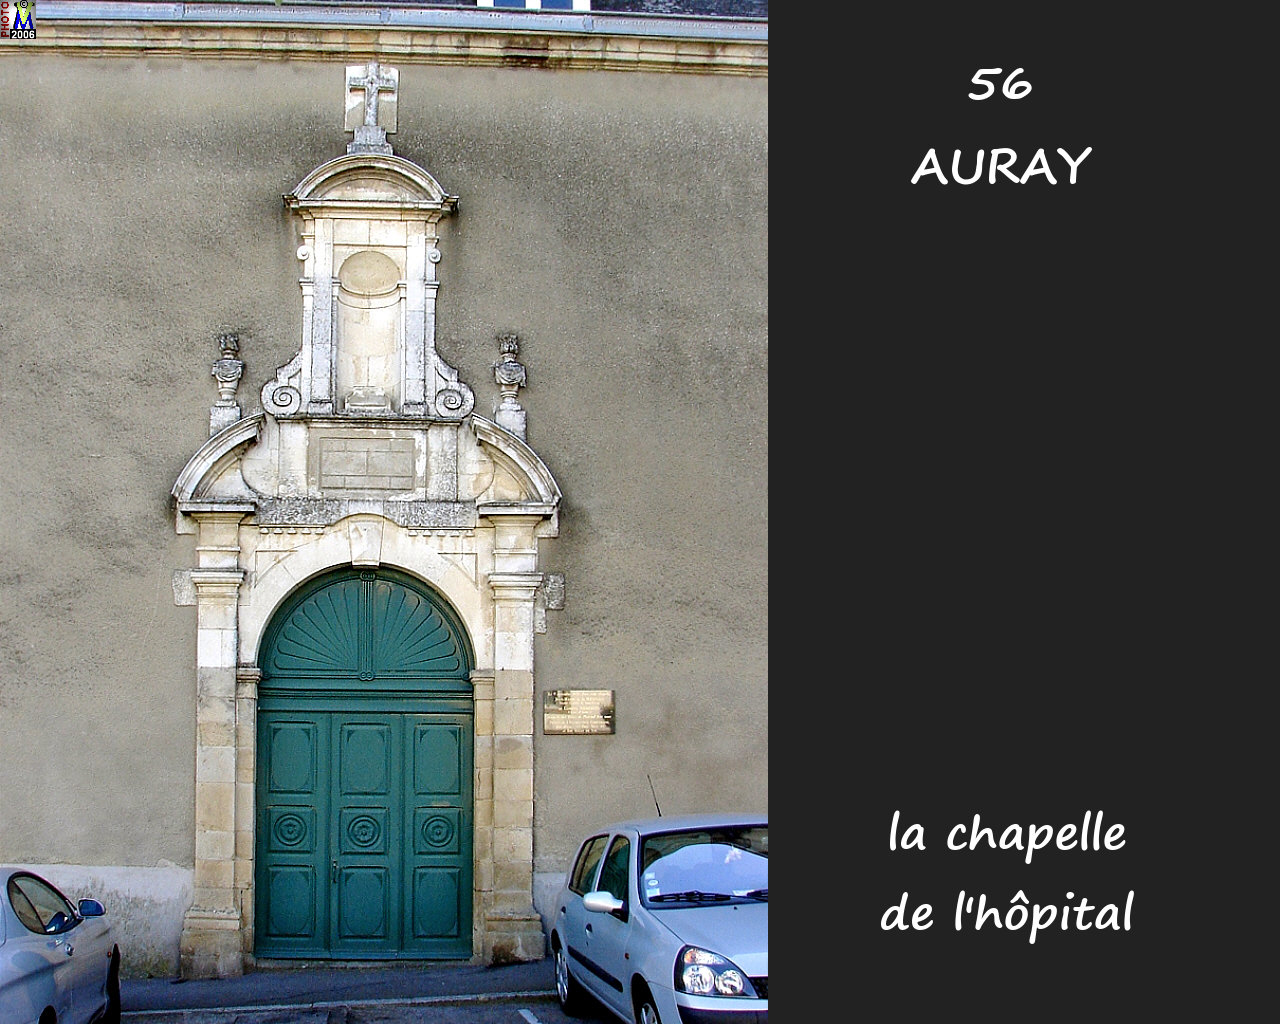 56AURAY_chapelle_Hopital_102.jpg